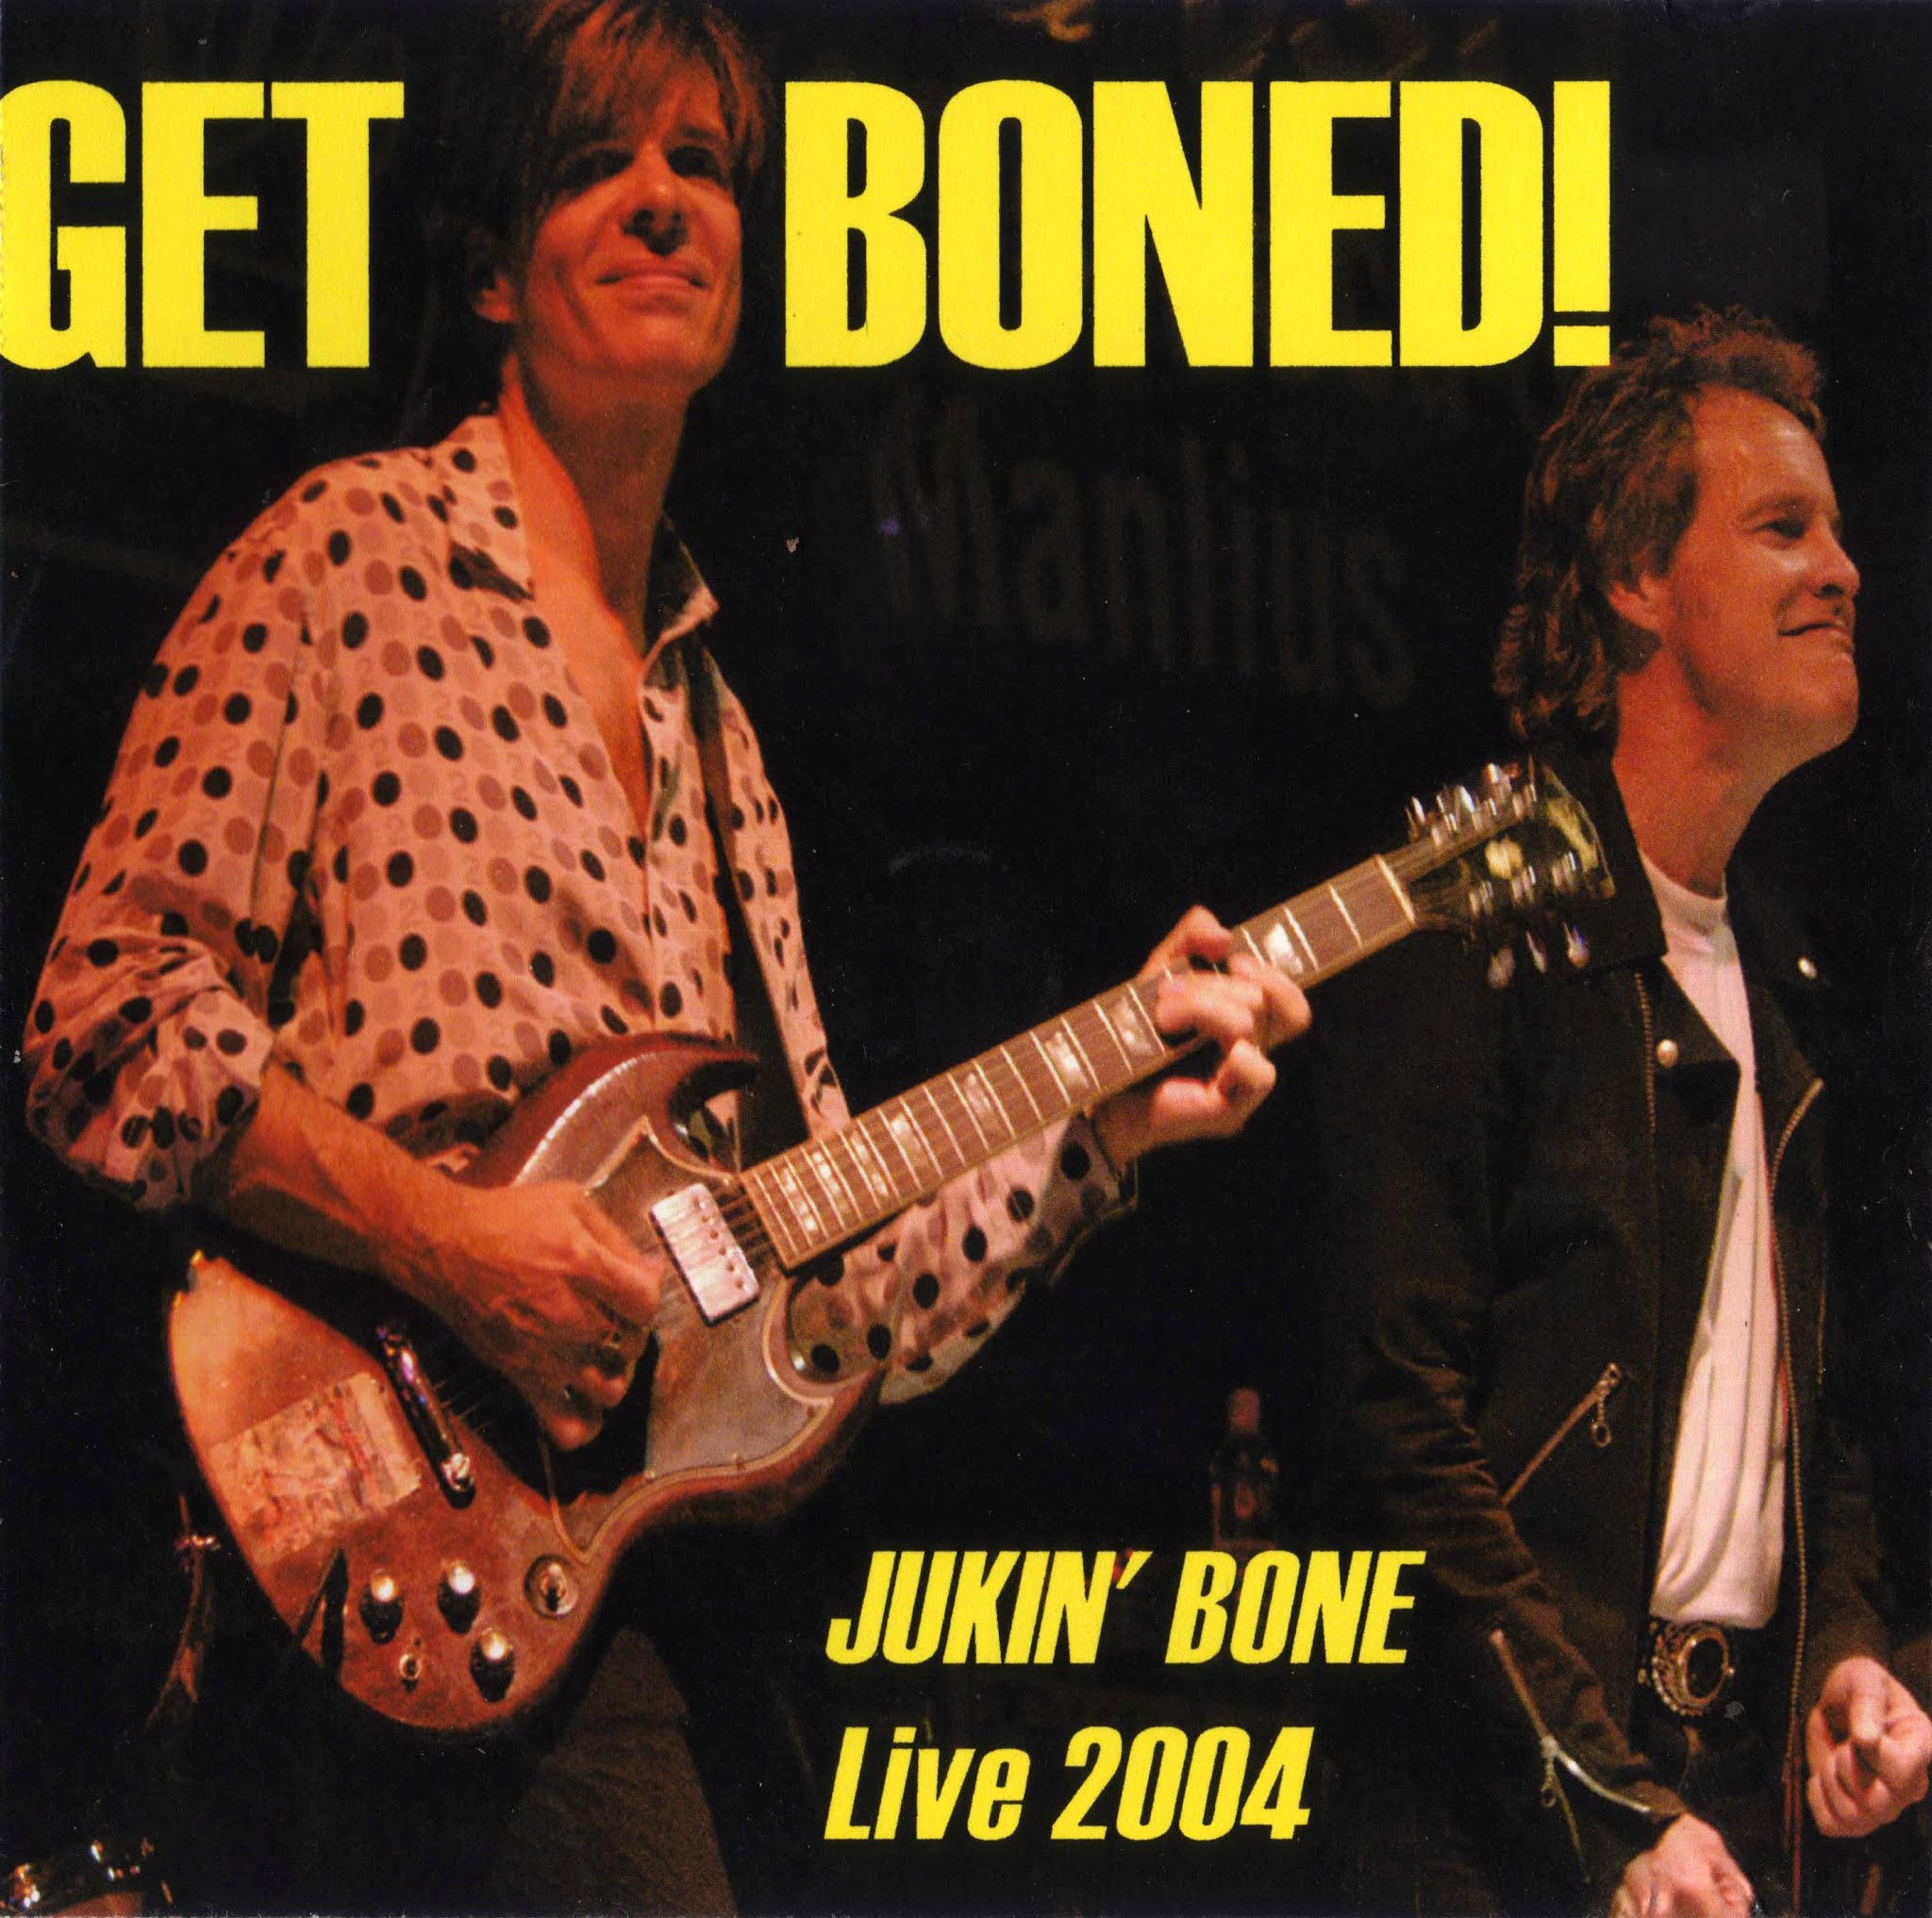 Jukin Bone Band. 2004 - Live licks CD. Ridin bone